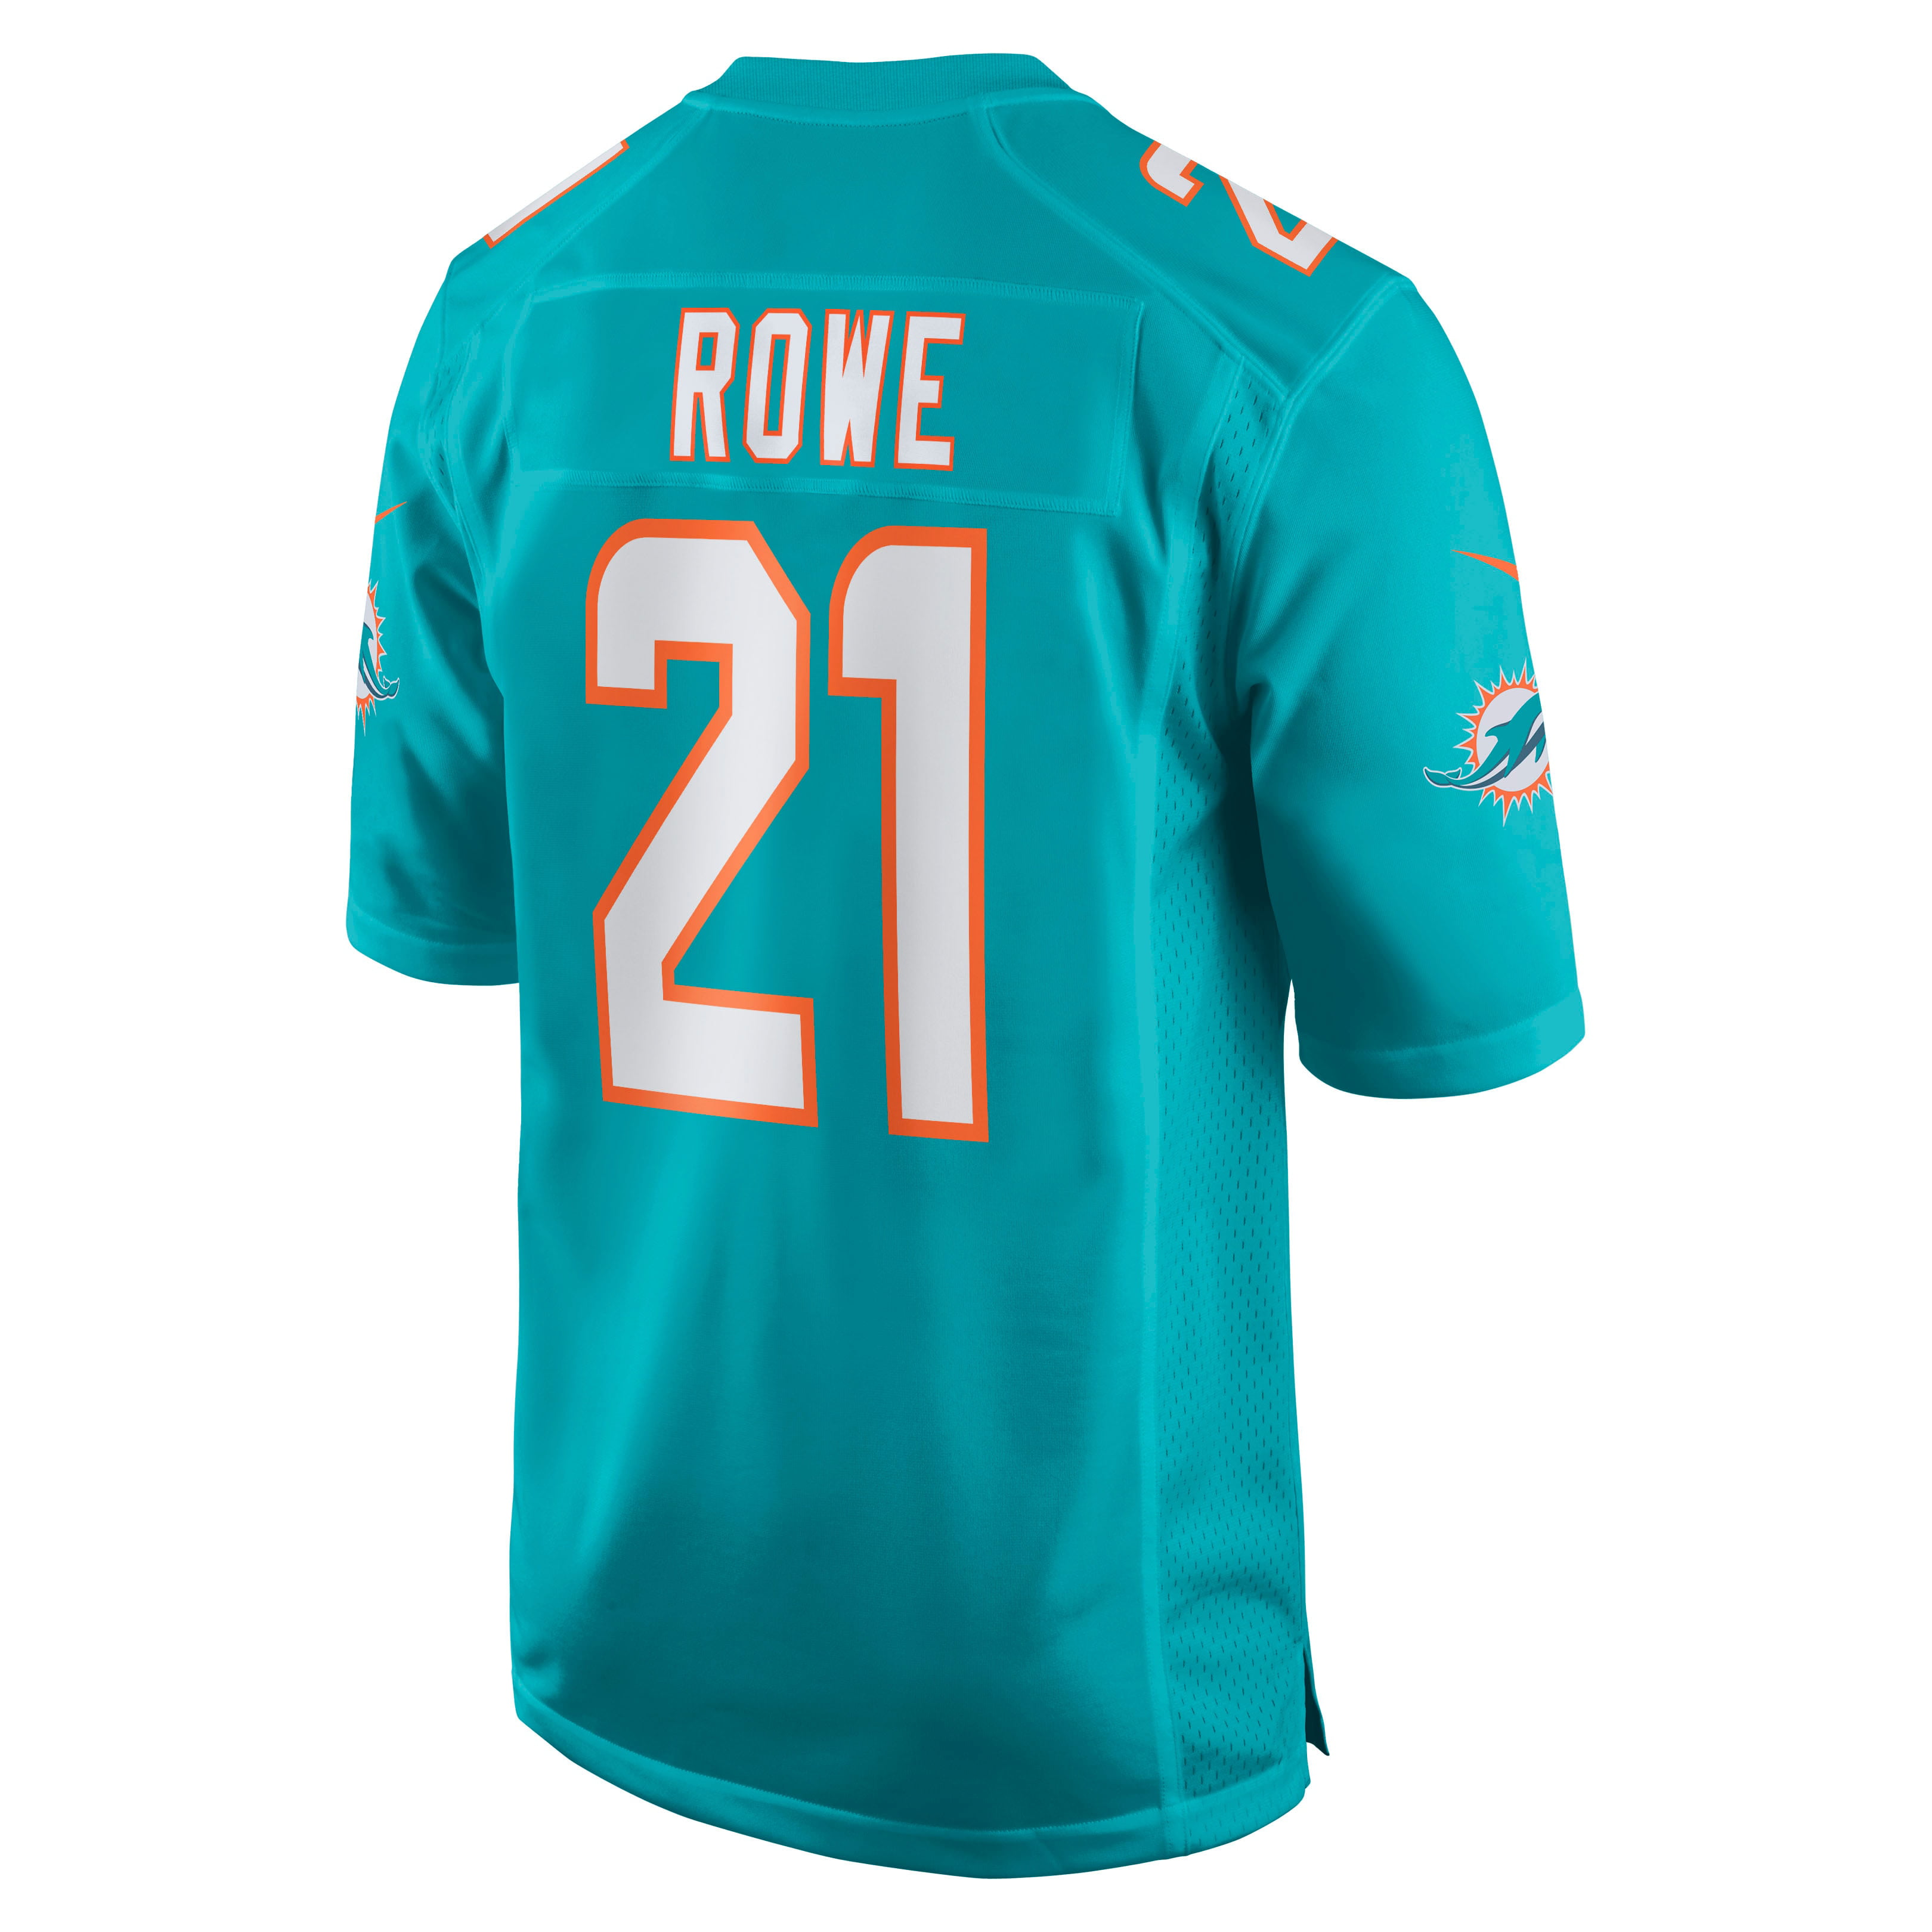 Eric Rowe Miami Dolphins Nike Game Jersey - Aqua